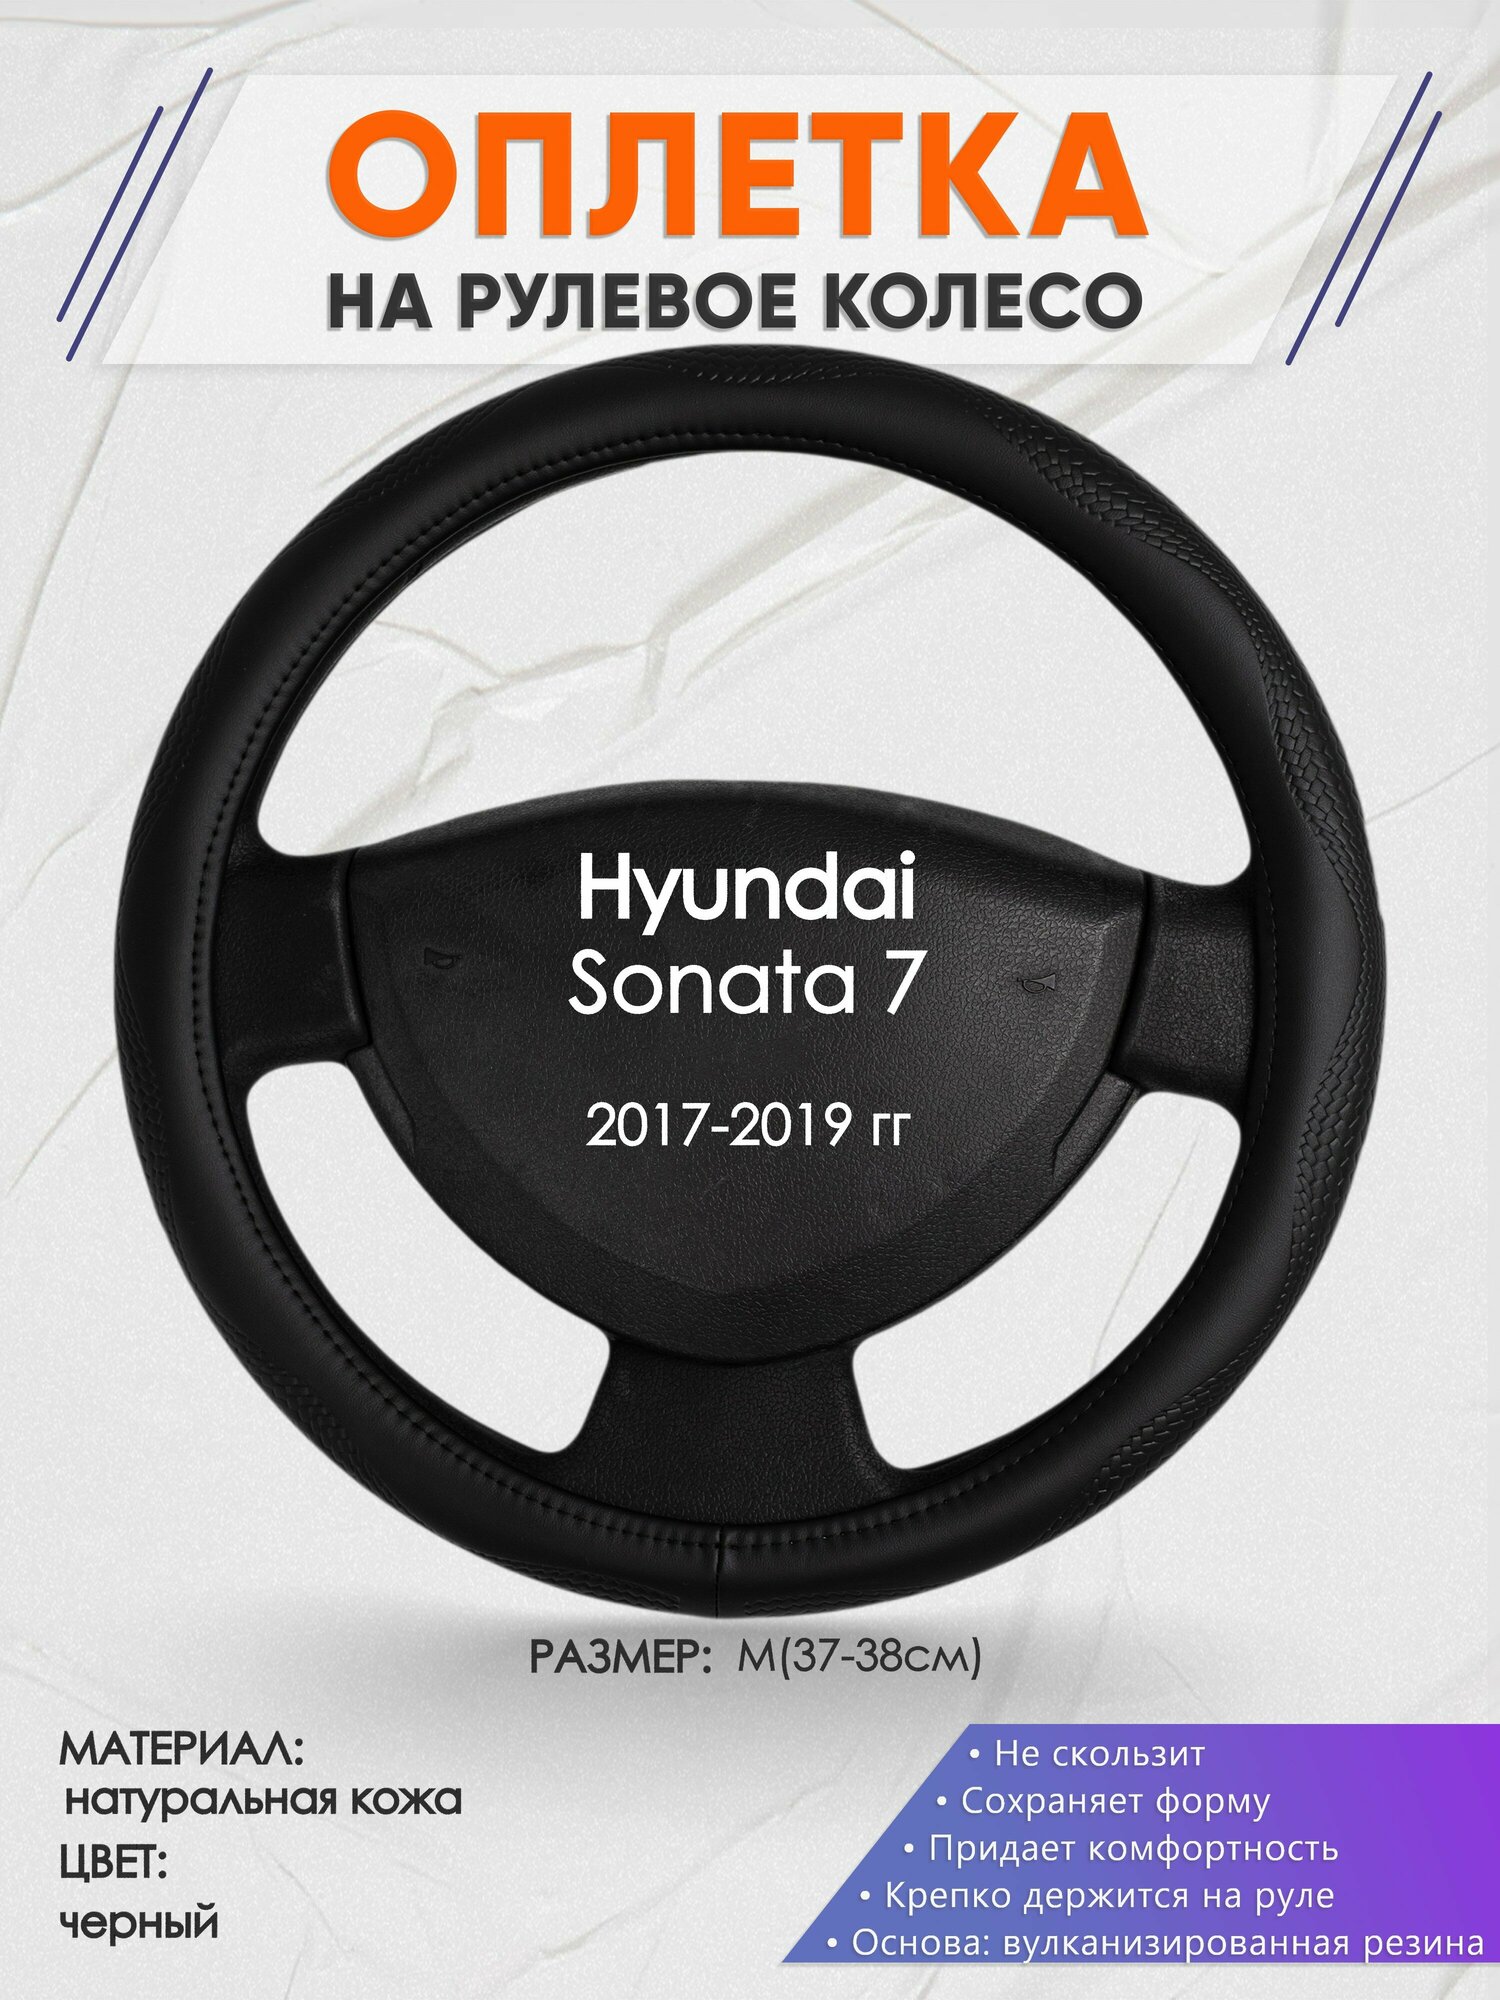 Оплетка на руль для Hyundai Sonata 7(Хендай Соната 7) 2017-2019 M(37-38см) Натуральная кожа 21